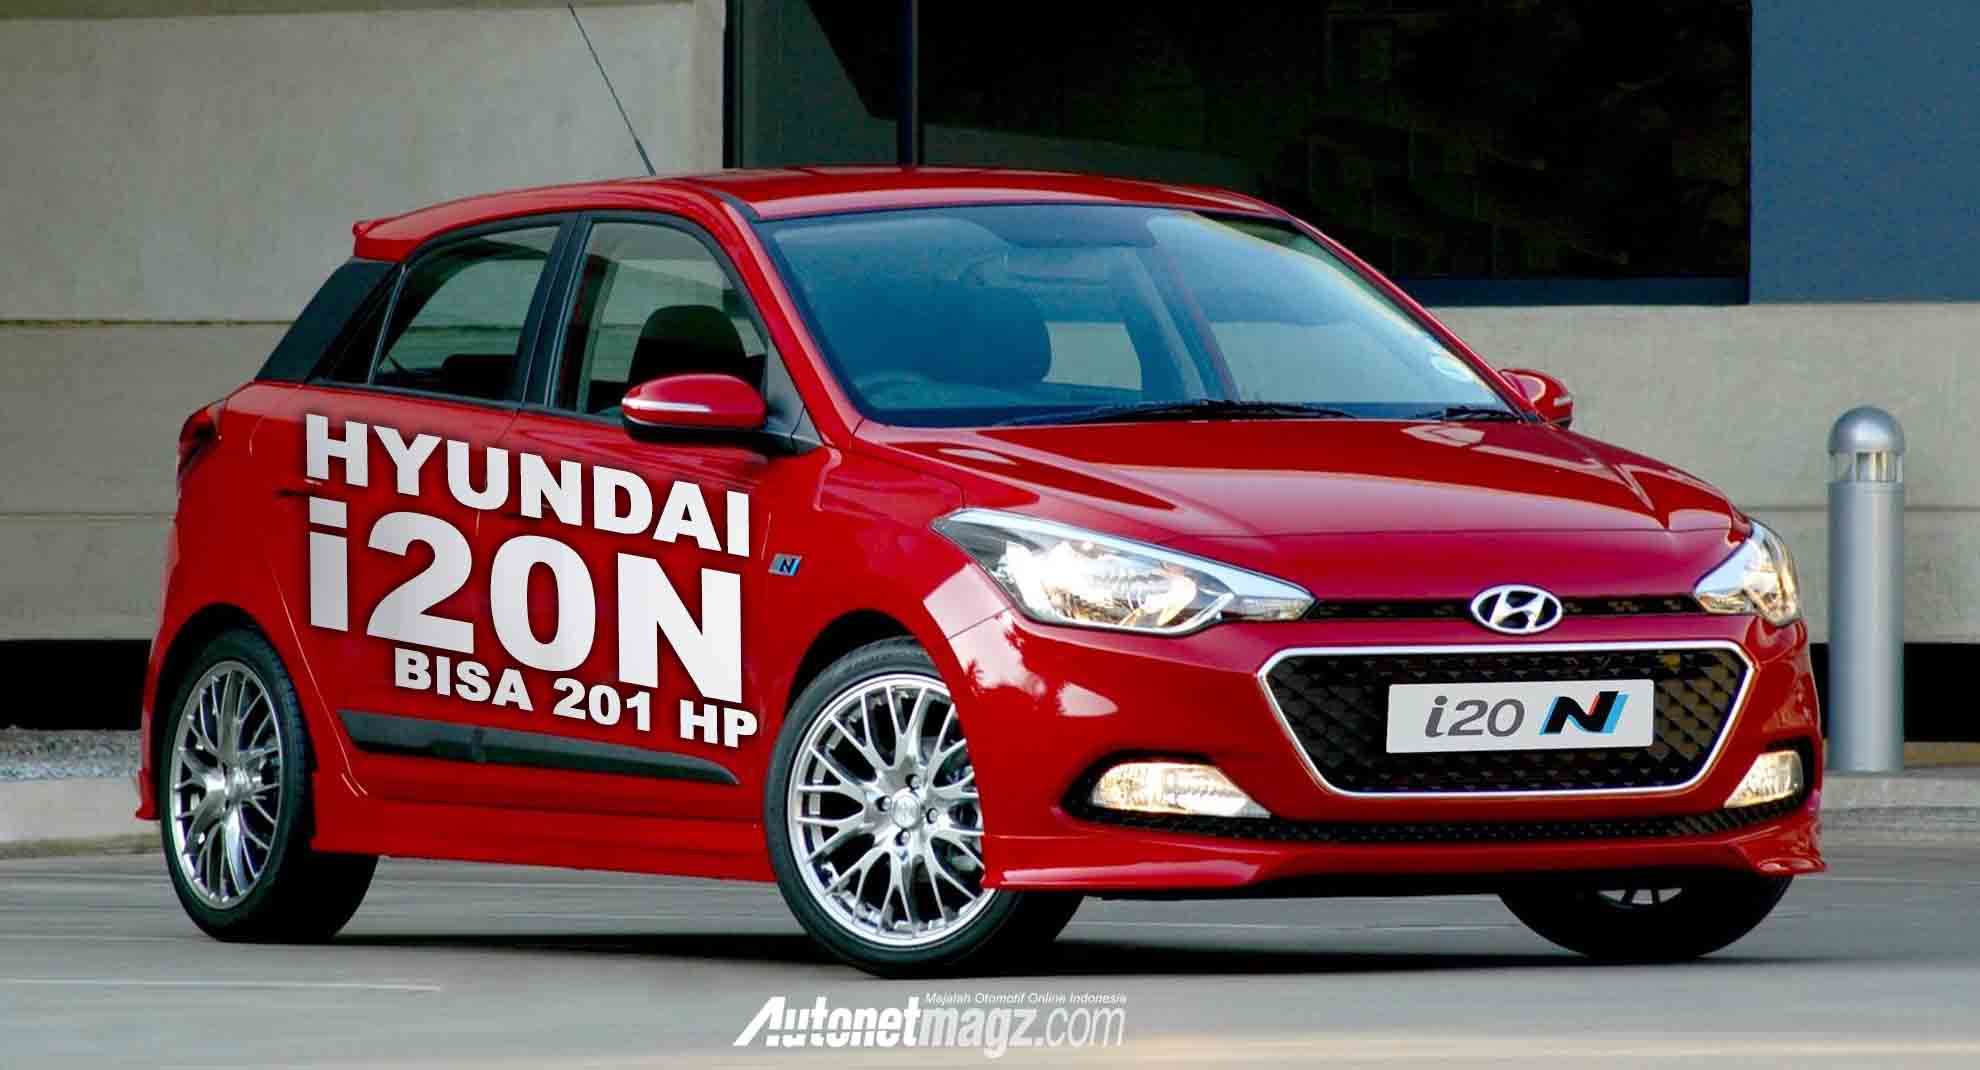 Berita, Hyundai i20 N cover: Hyundai Sedang Siapkan Versi Kencang dari Hyundai i20